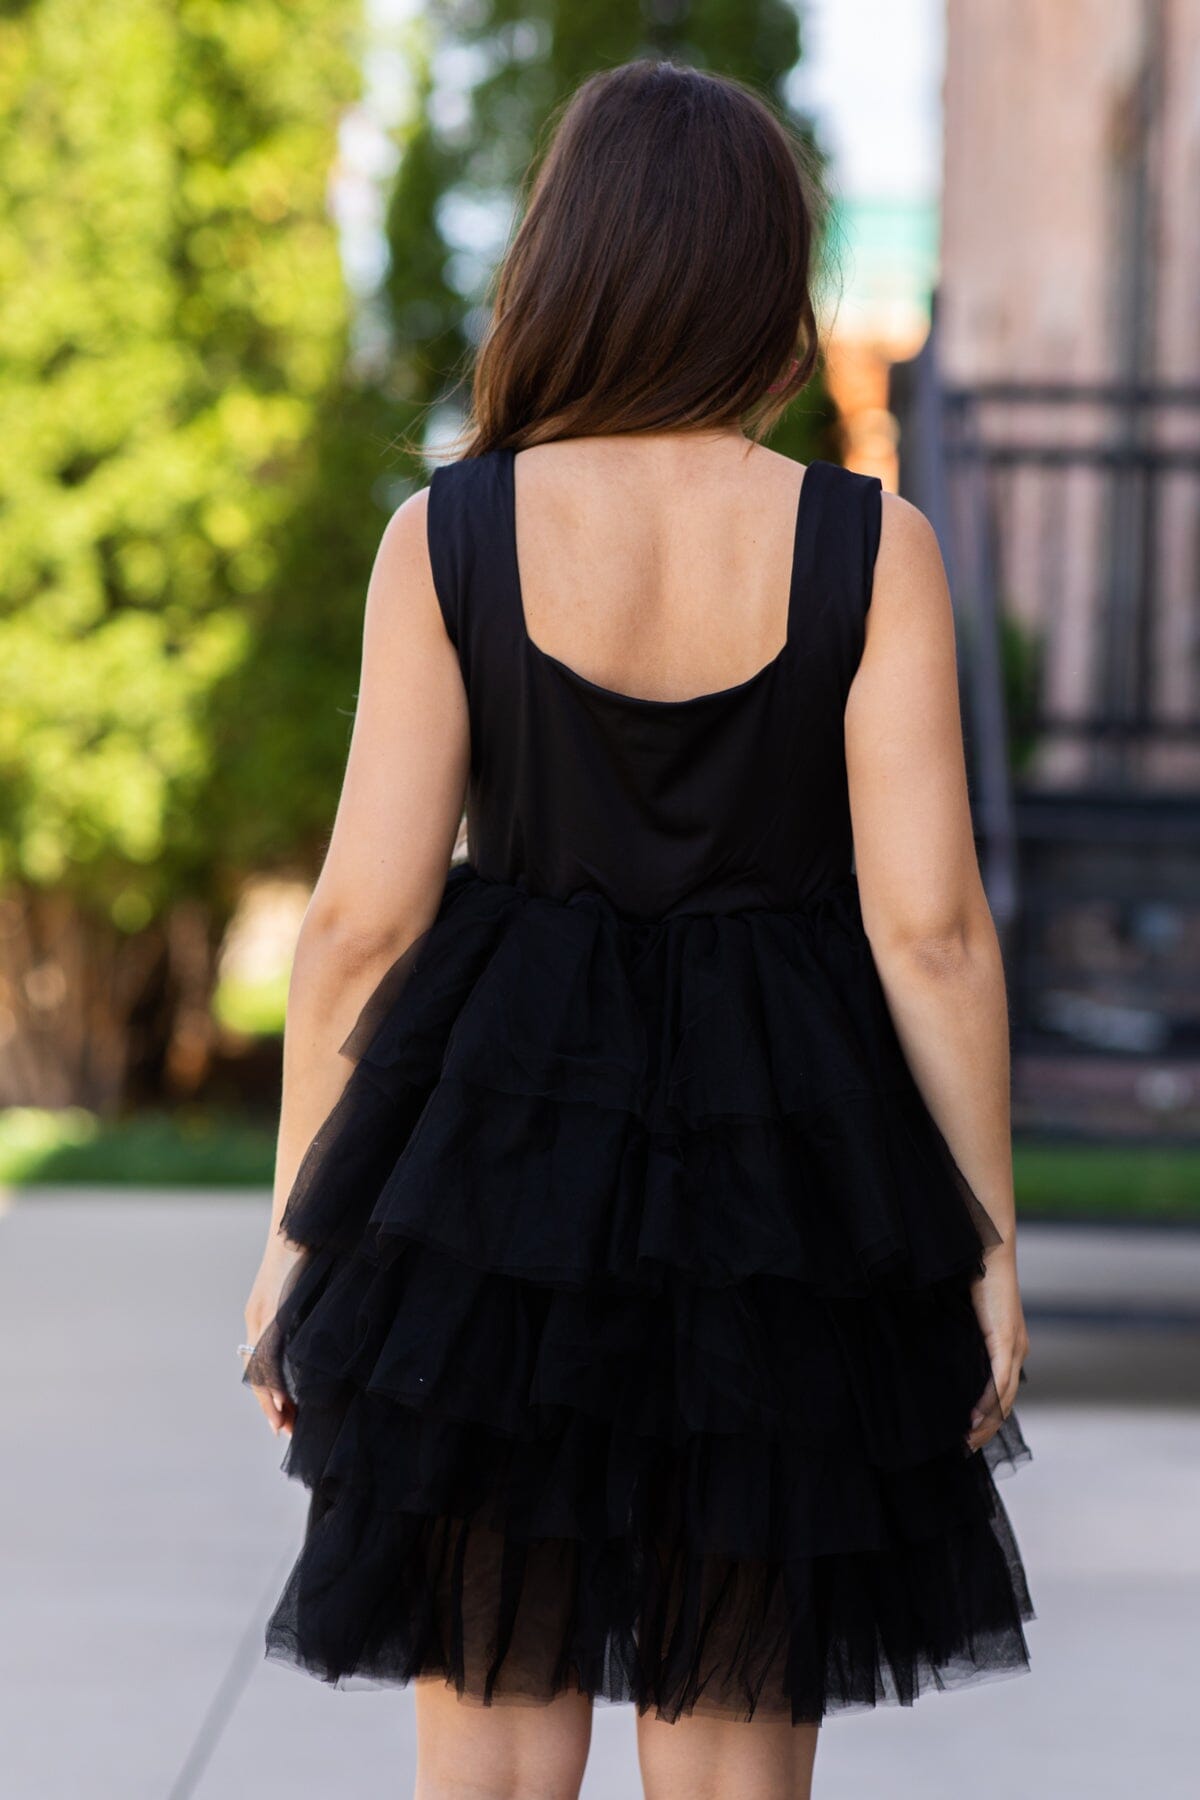 Black Square Neck Tulle Skirt Dress - Filly Flair